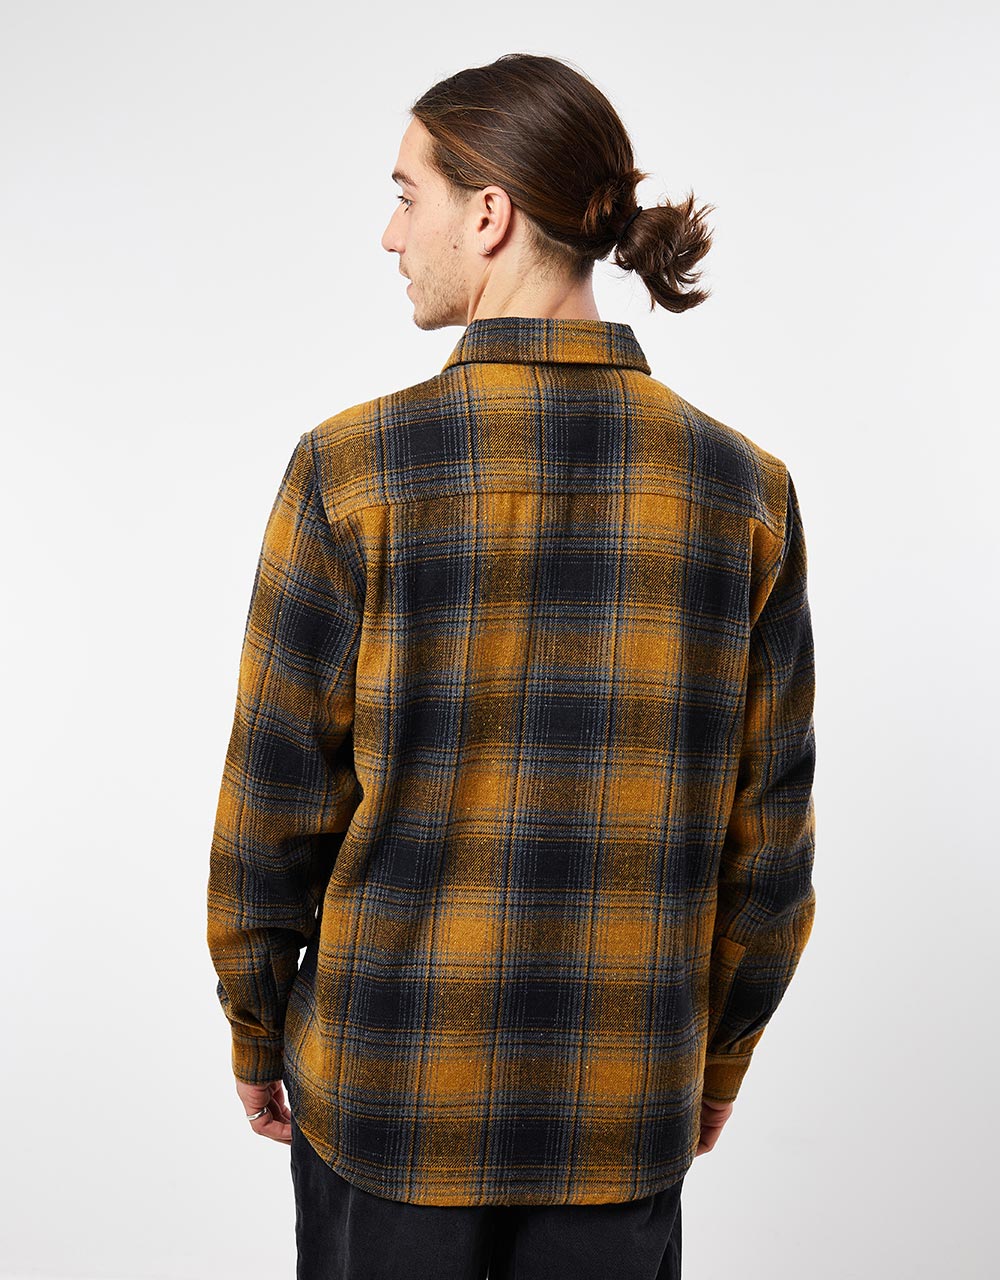 Etnies x Independent Flannel Shirt - Tobacco